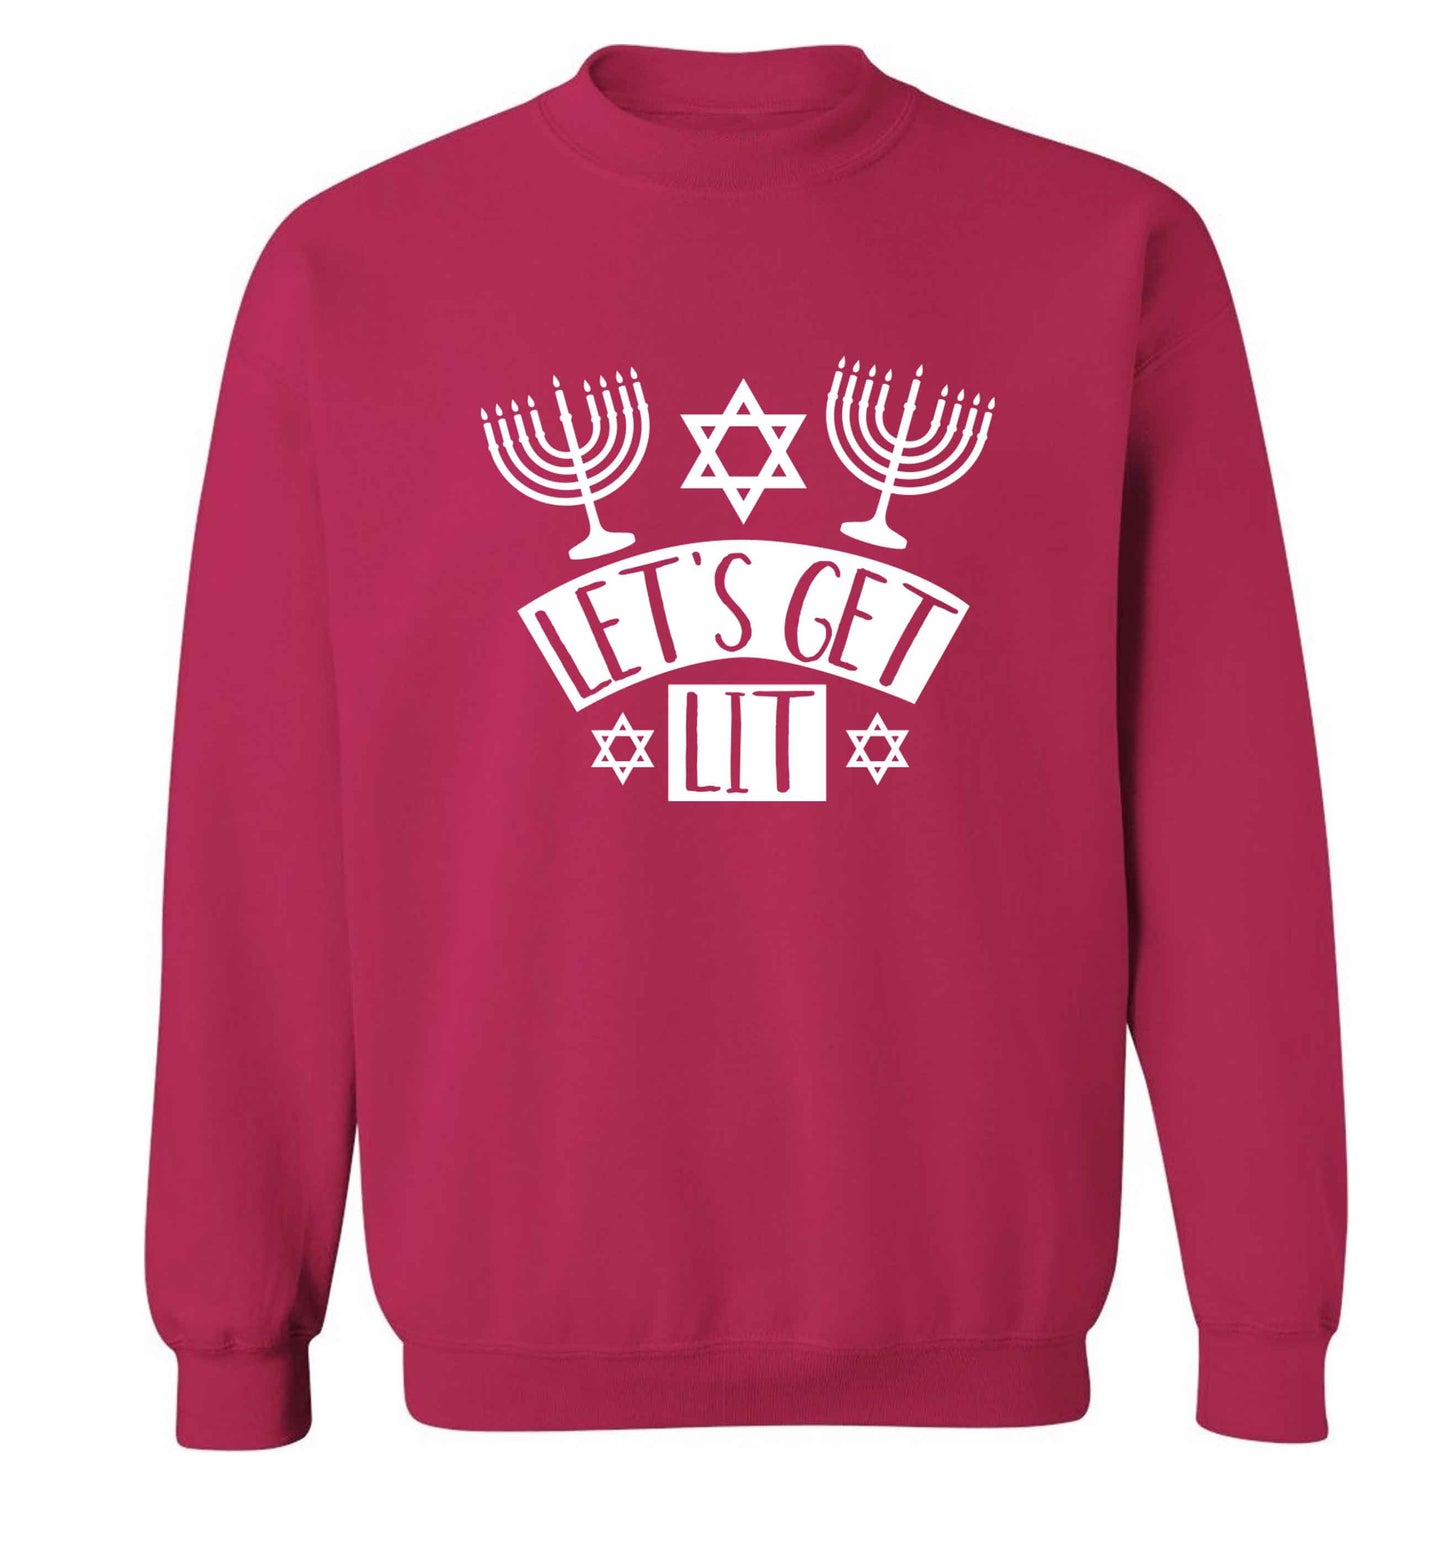 Let's get lit adult's unisex pink sweater 2XL